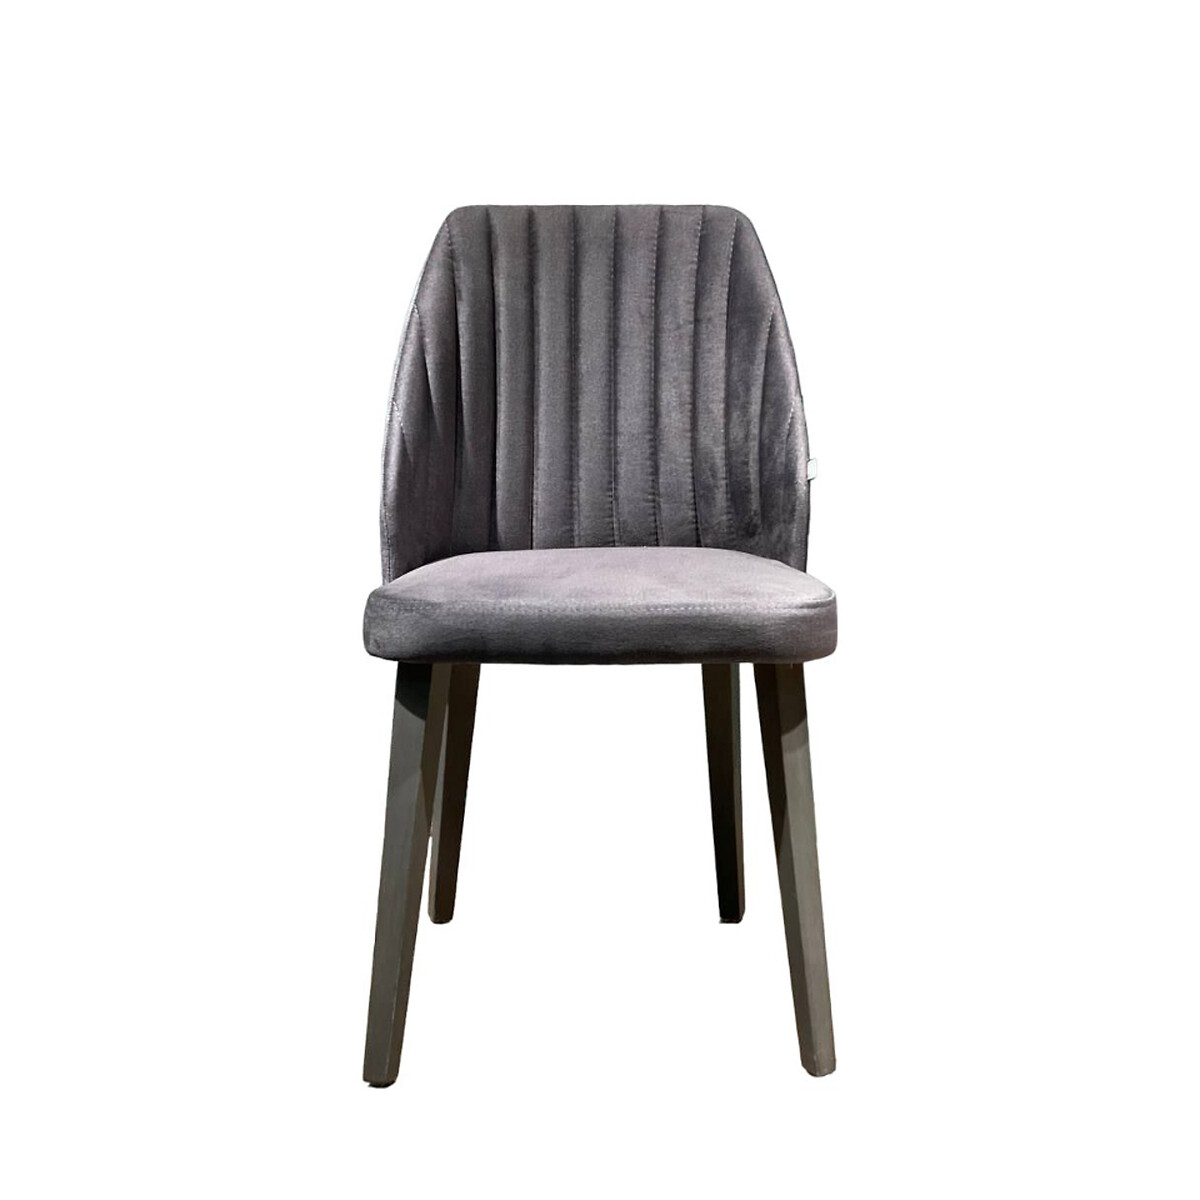 Стул Valentin единый размер серый стул с фланелевым покрытием tibby единый размер серый